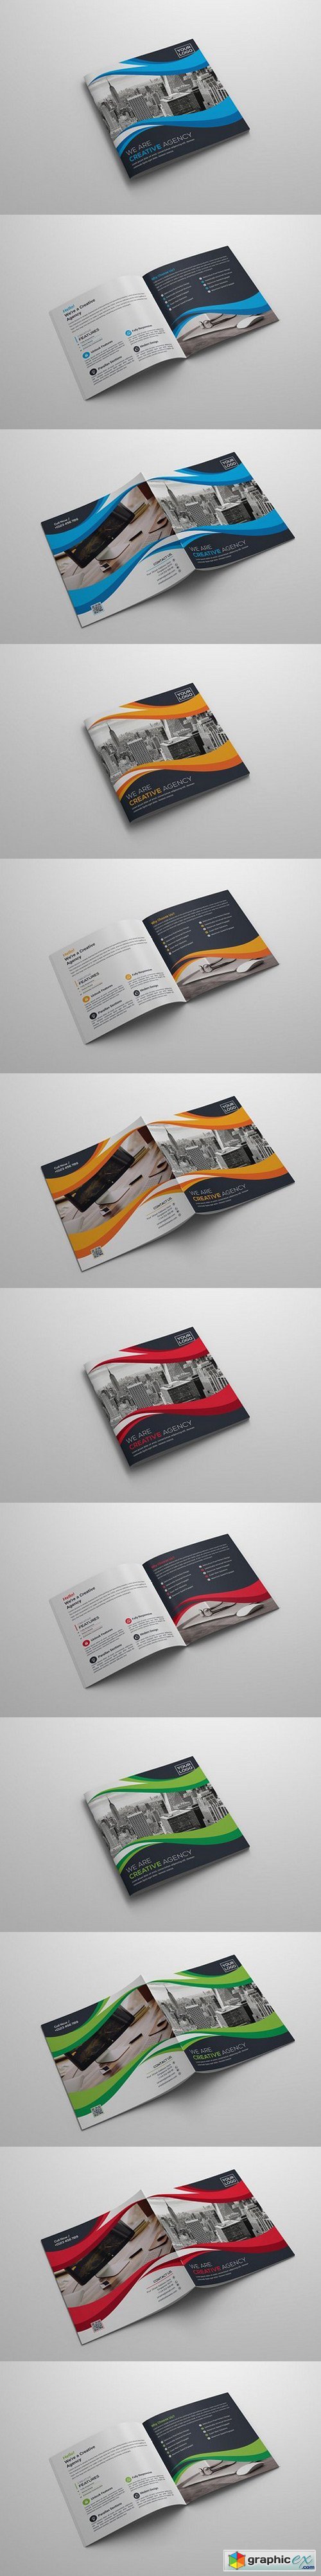 The Square Bi-Fold Brochure